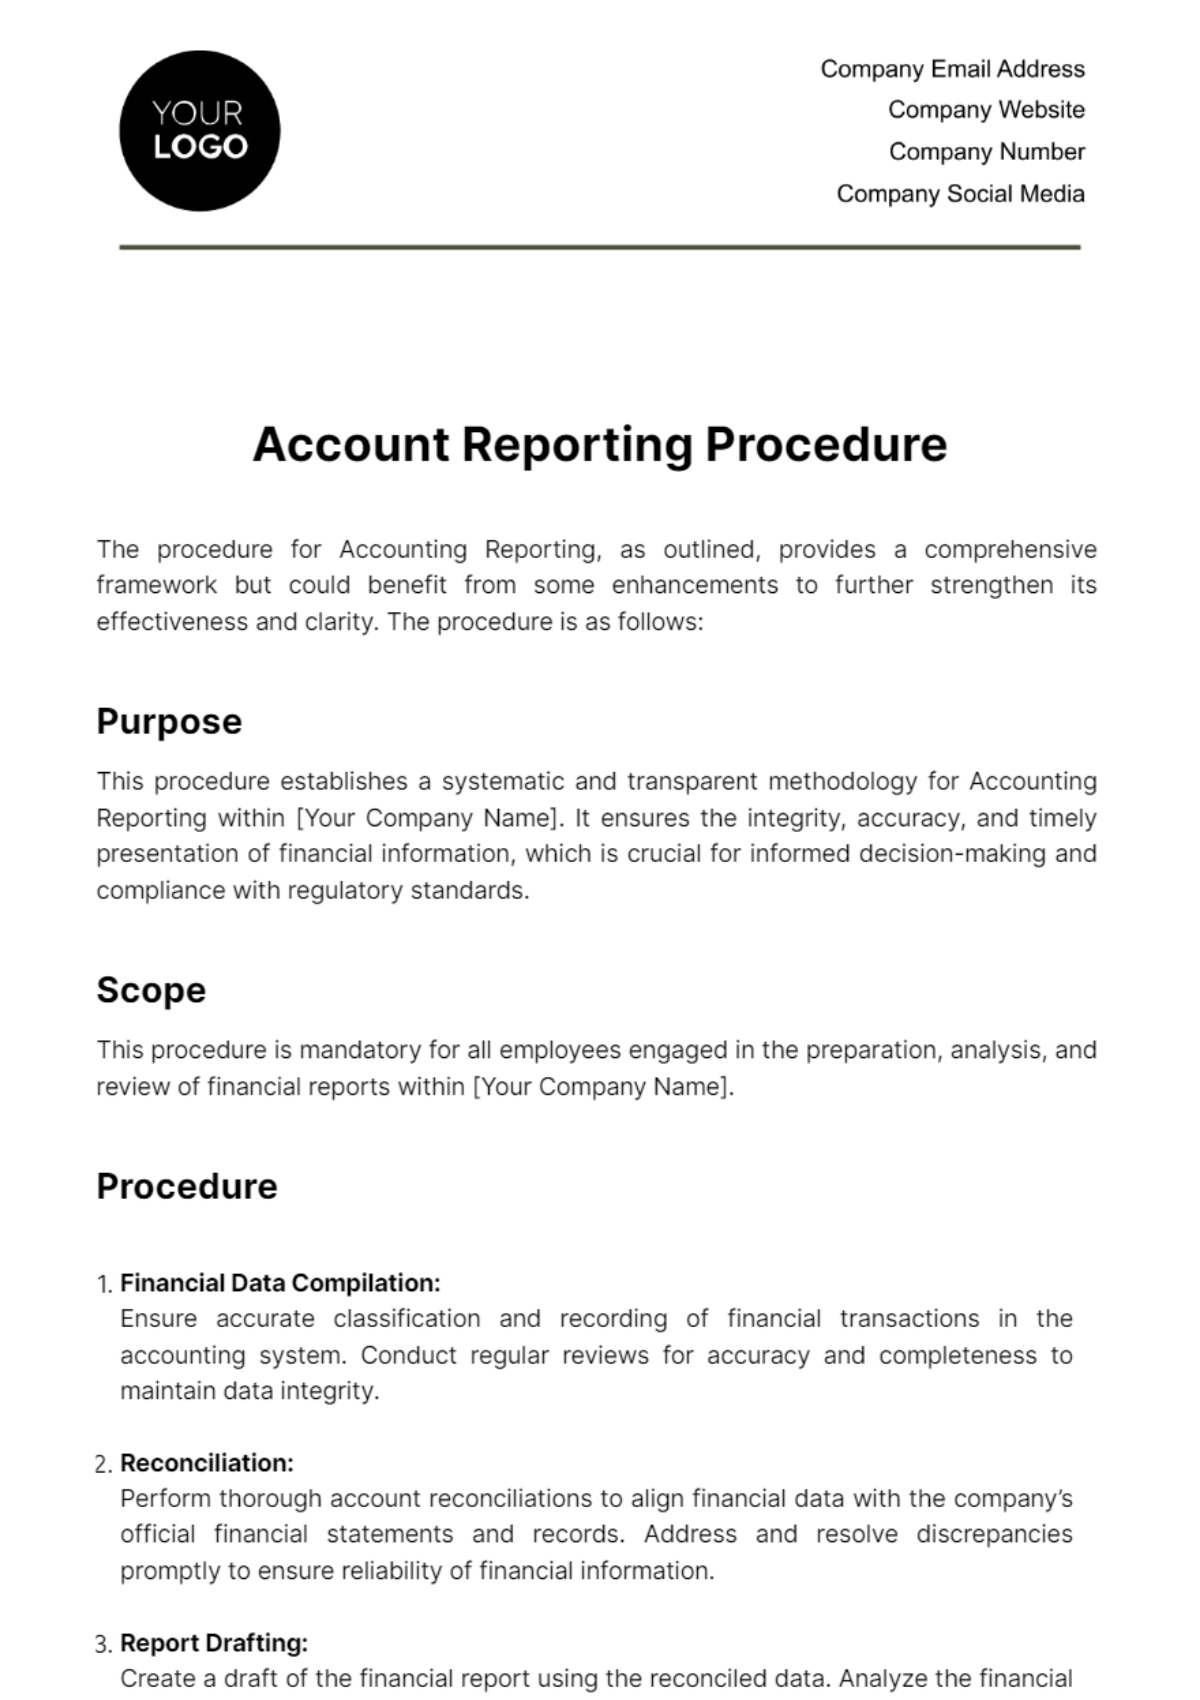 Account Reporting Procedure Template